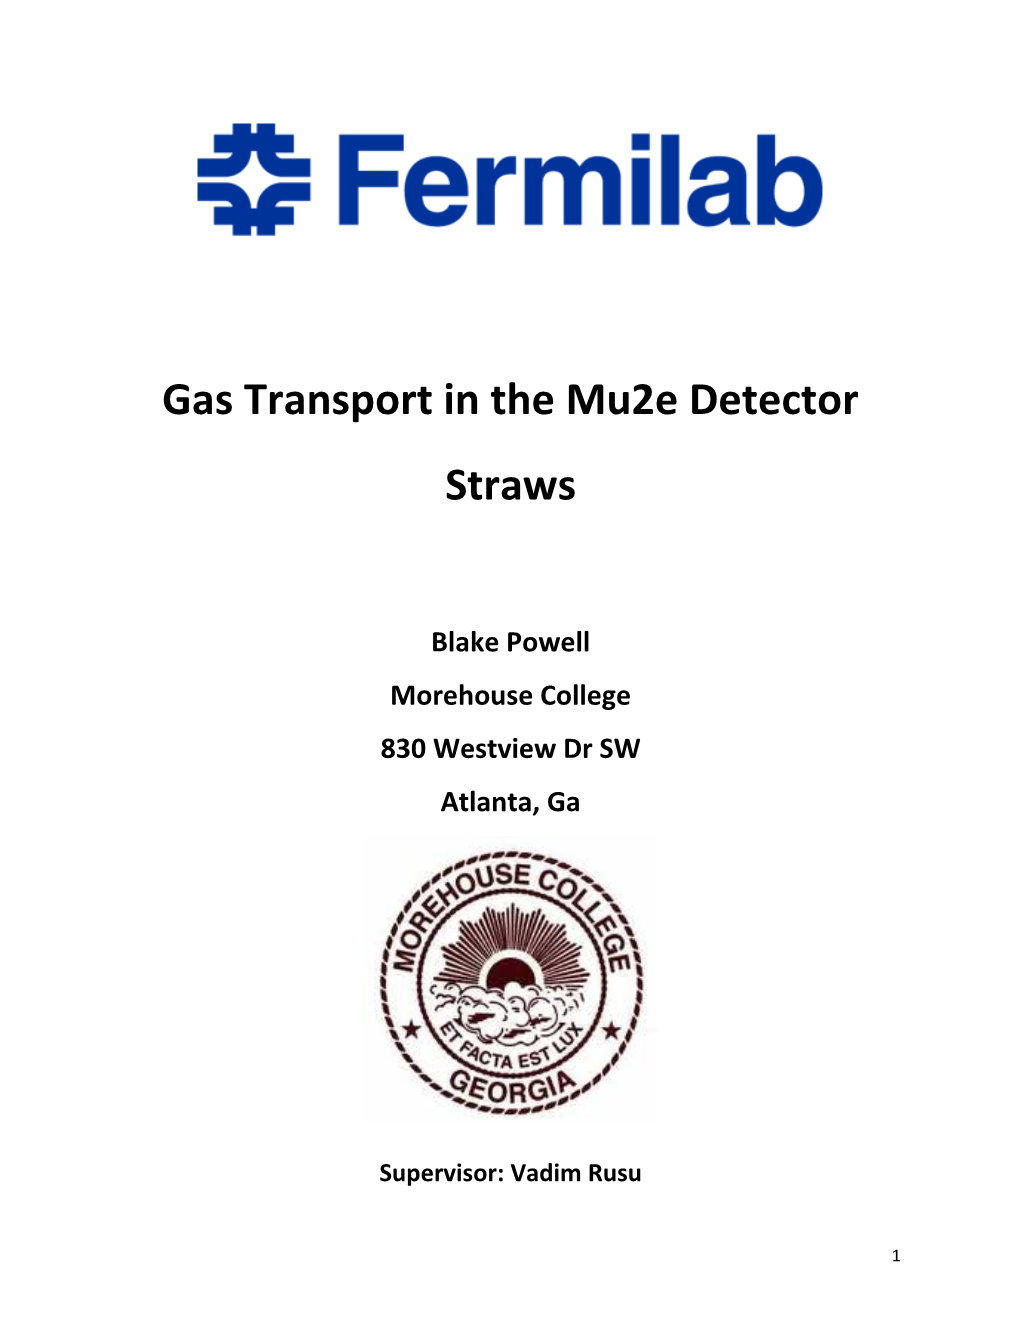 Gas Transport in the Mu2e Detector Straws